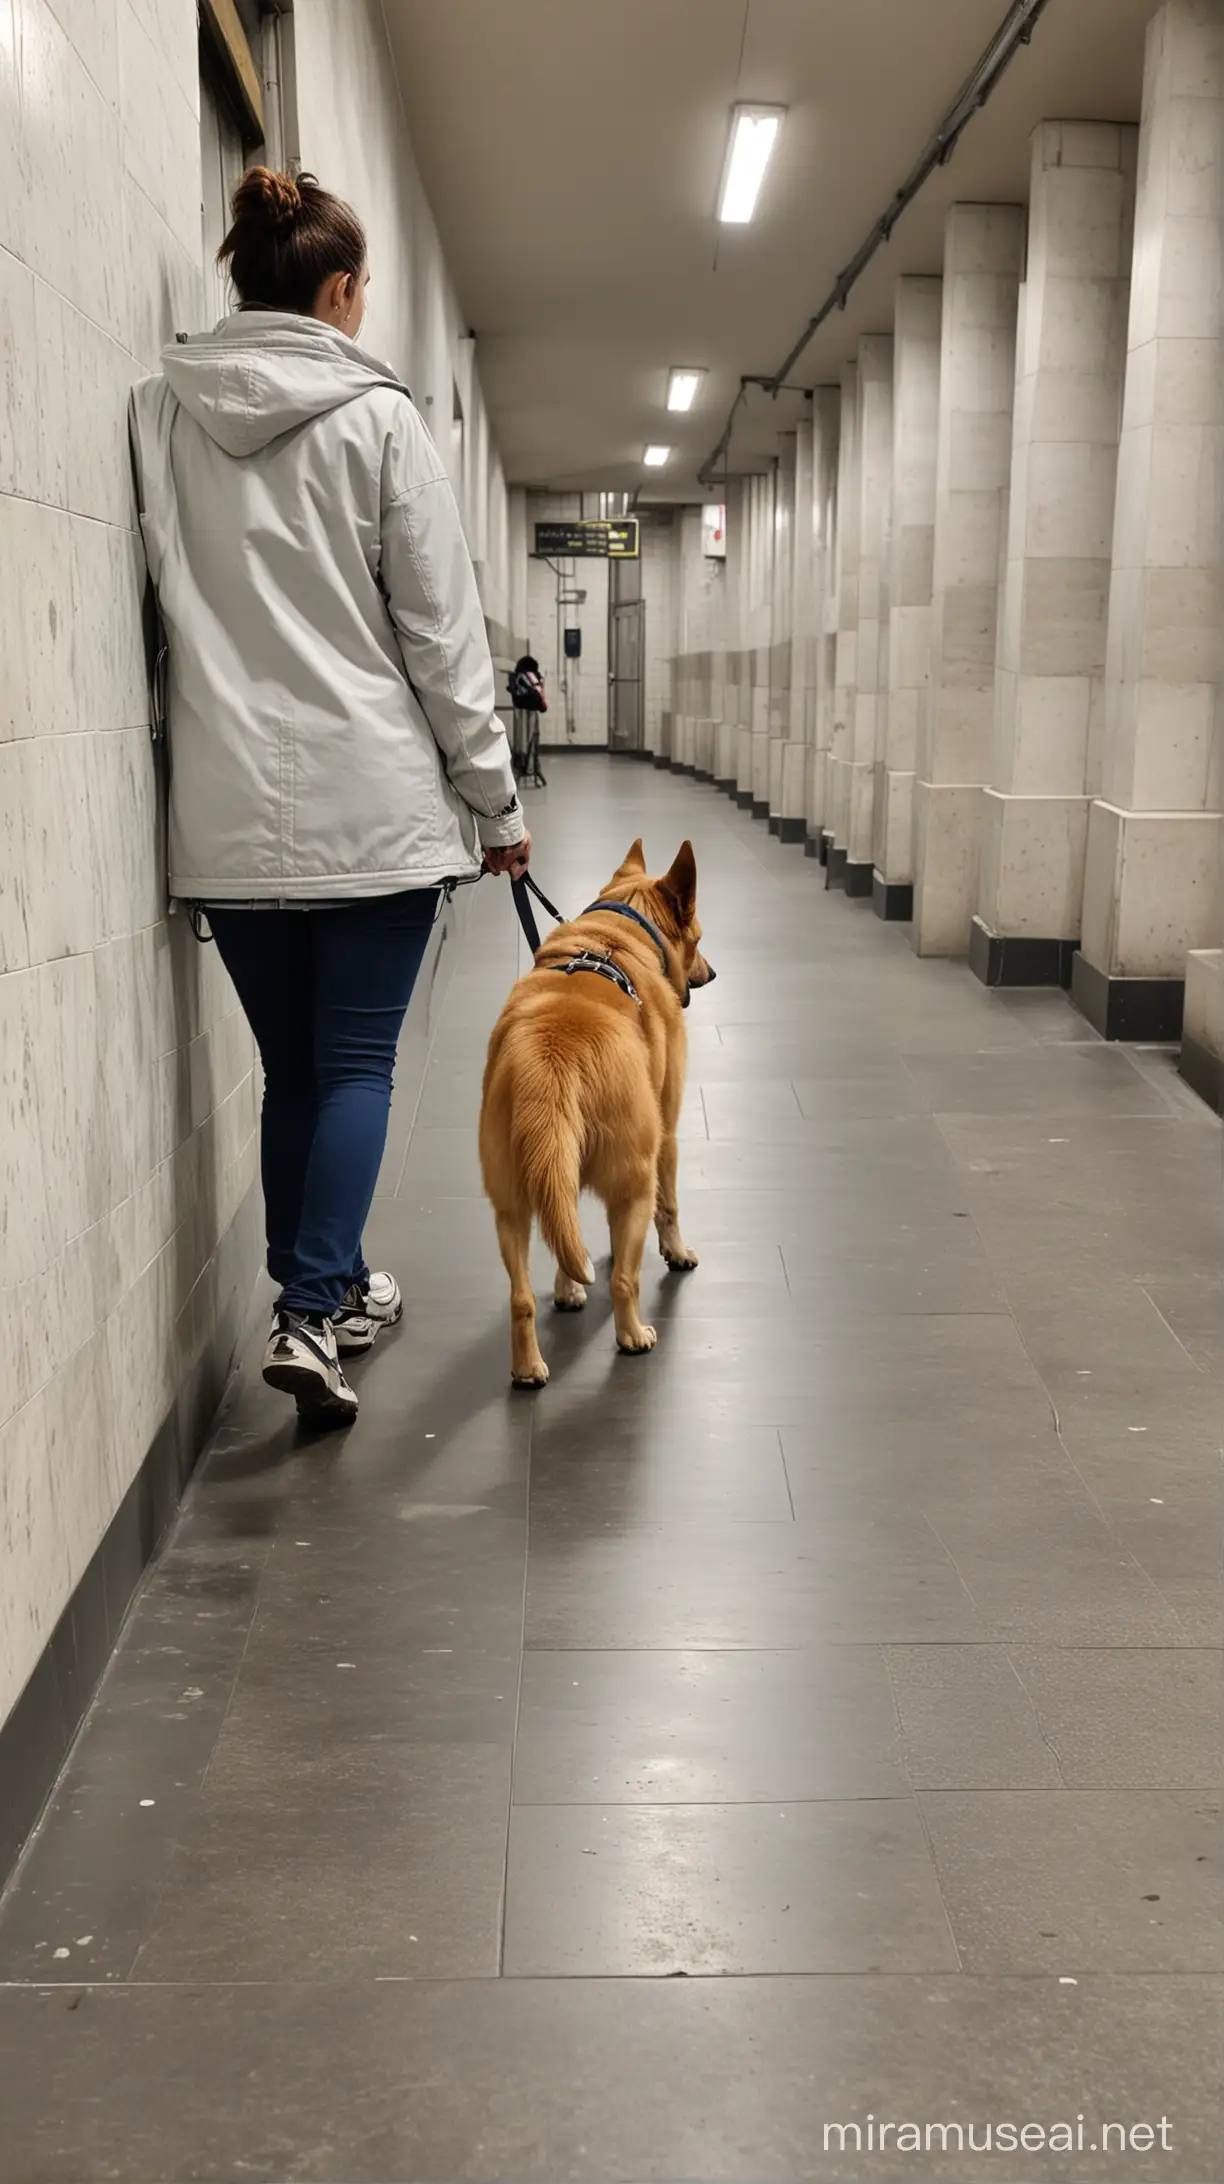 Metro Dog Walking Urban Canine Stroll in Public Transit